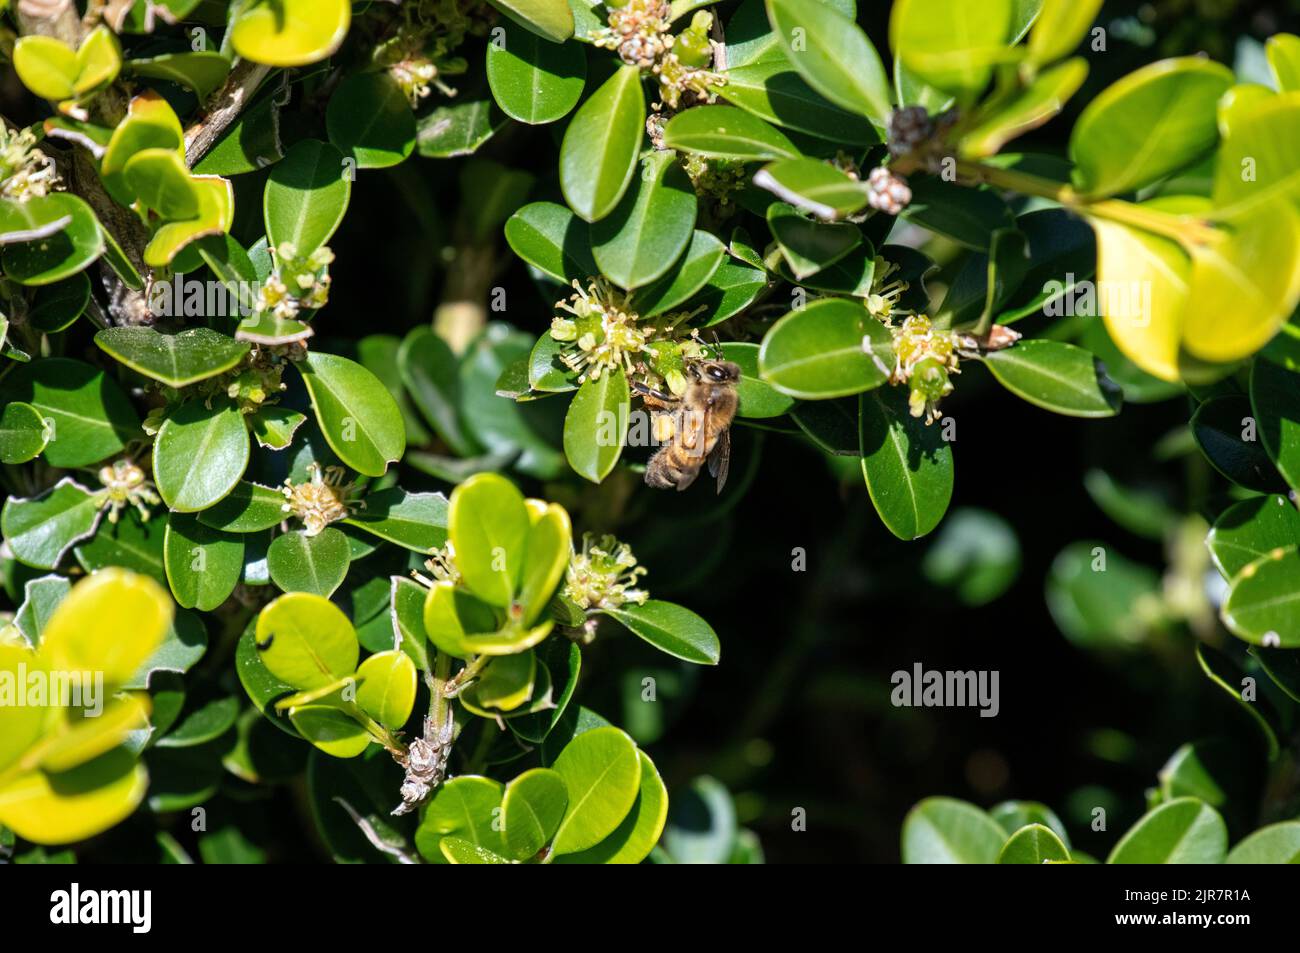 A Honeybee (Apis mellifera) on a flower at a garden in Sydney, NSW, Australia (Photo by Tara Chand Malhotra) Stock Photo